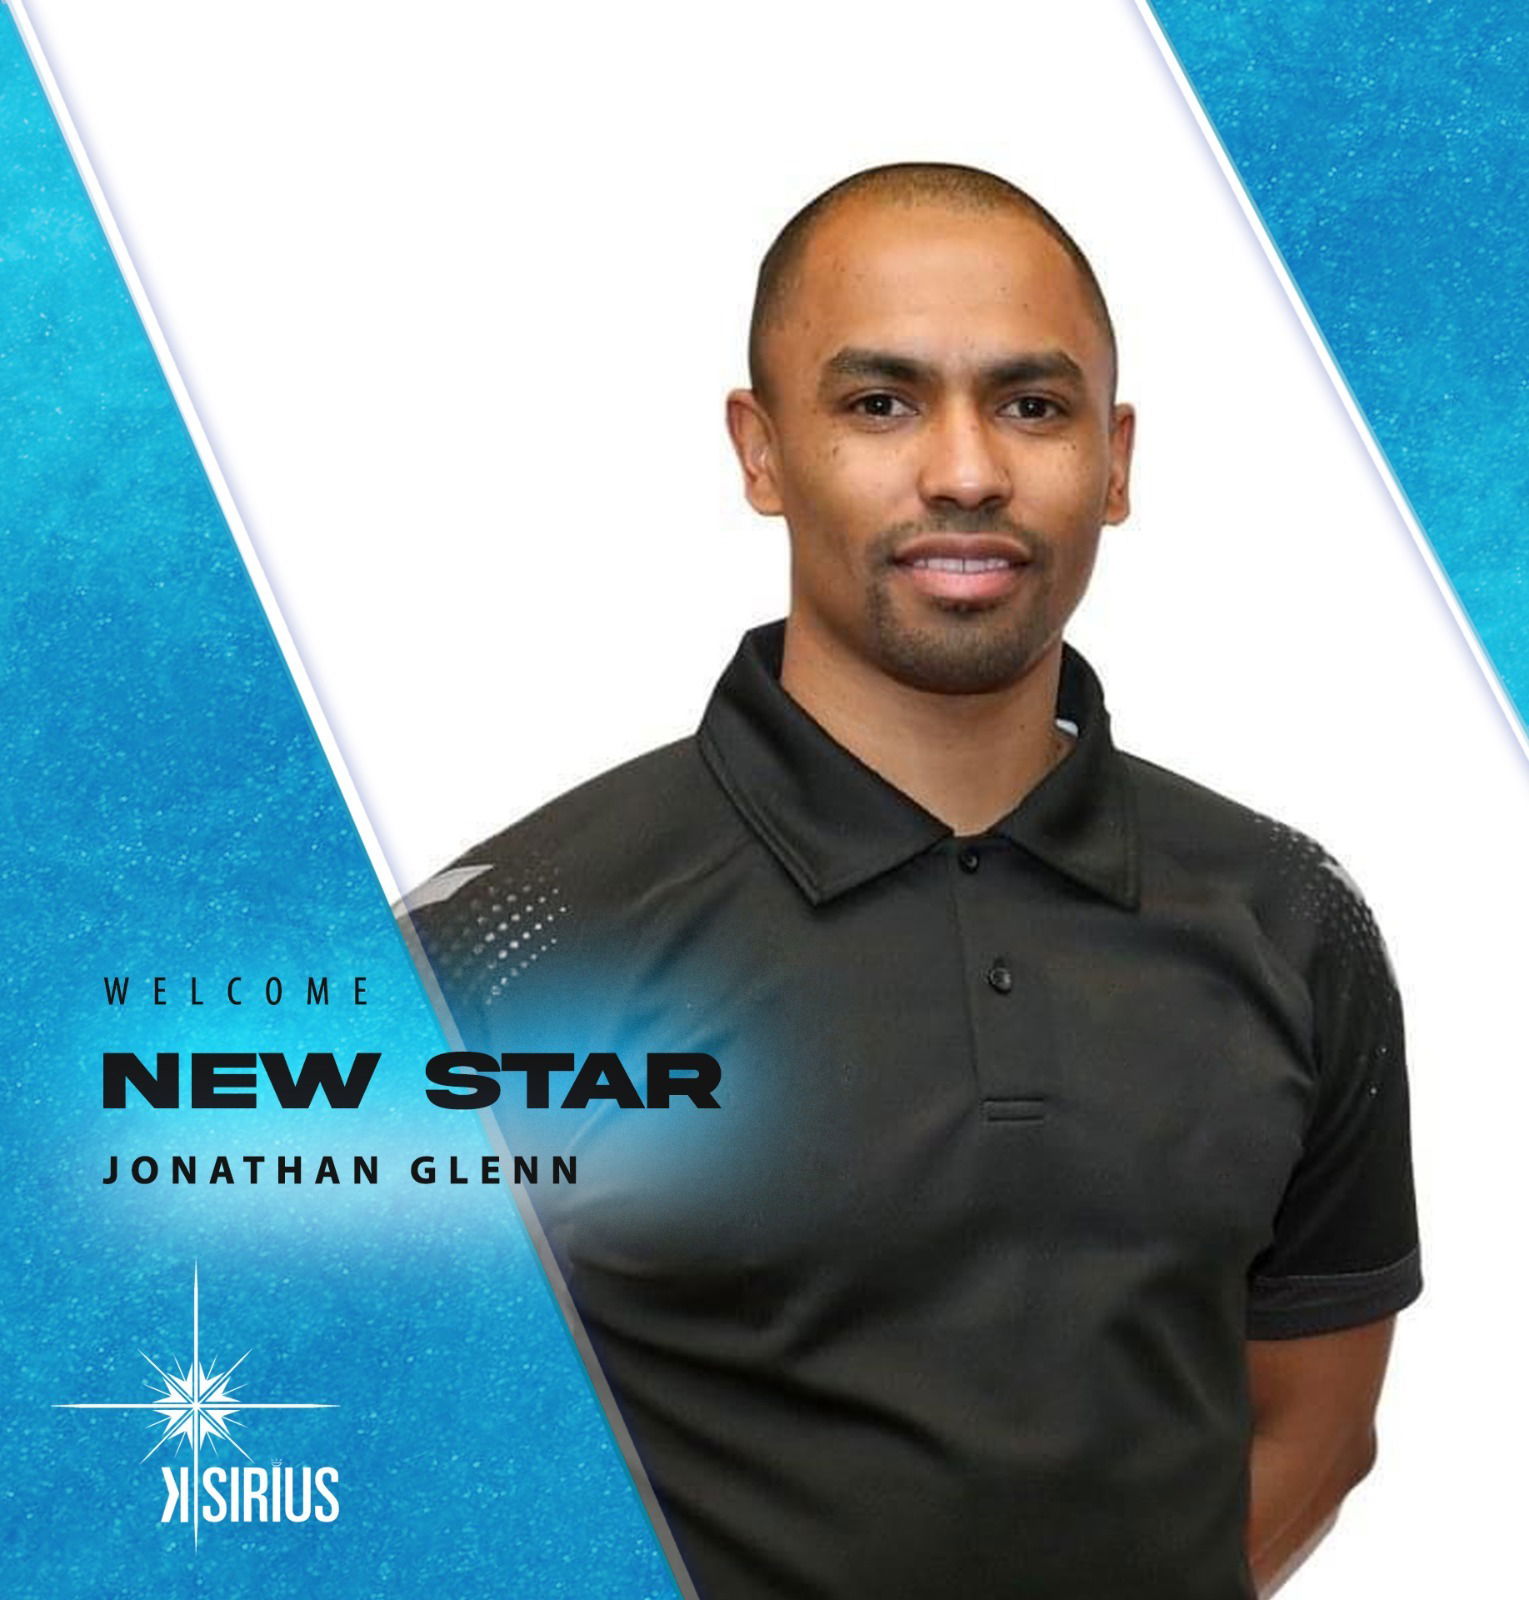 New Star: Jonathan Glenn